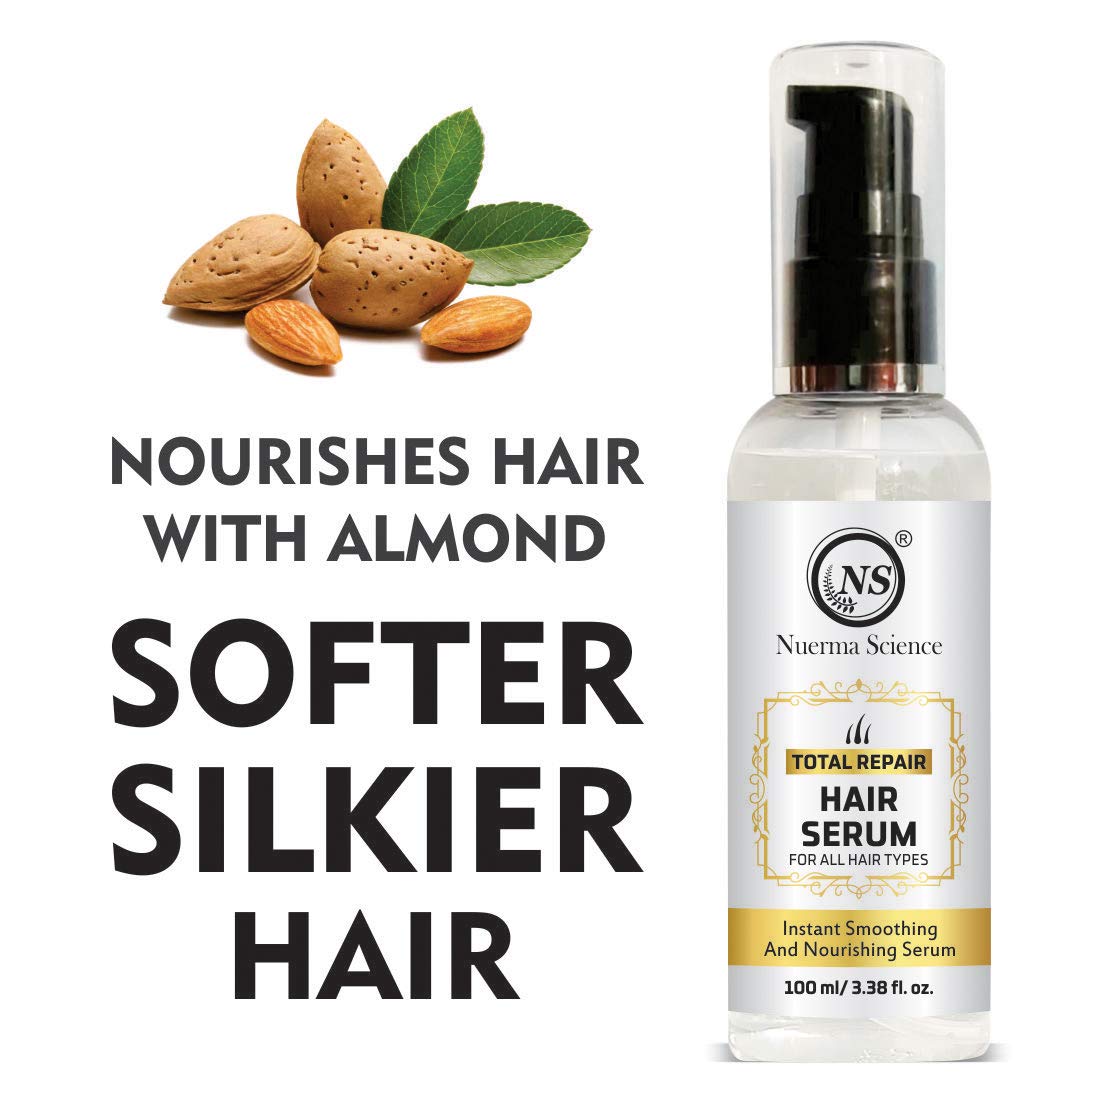 Nuerma Science Total Repair Hair Serum For Instant Smoothening and Nourishing Serum, 100 ML